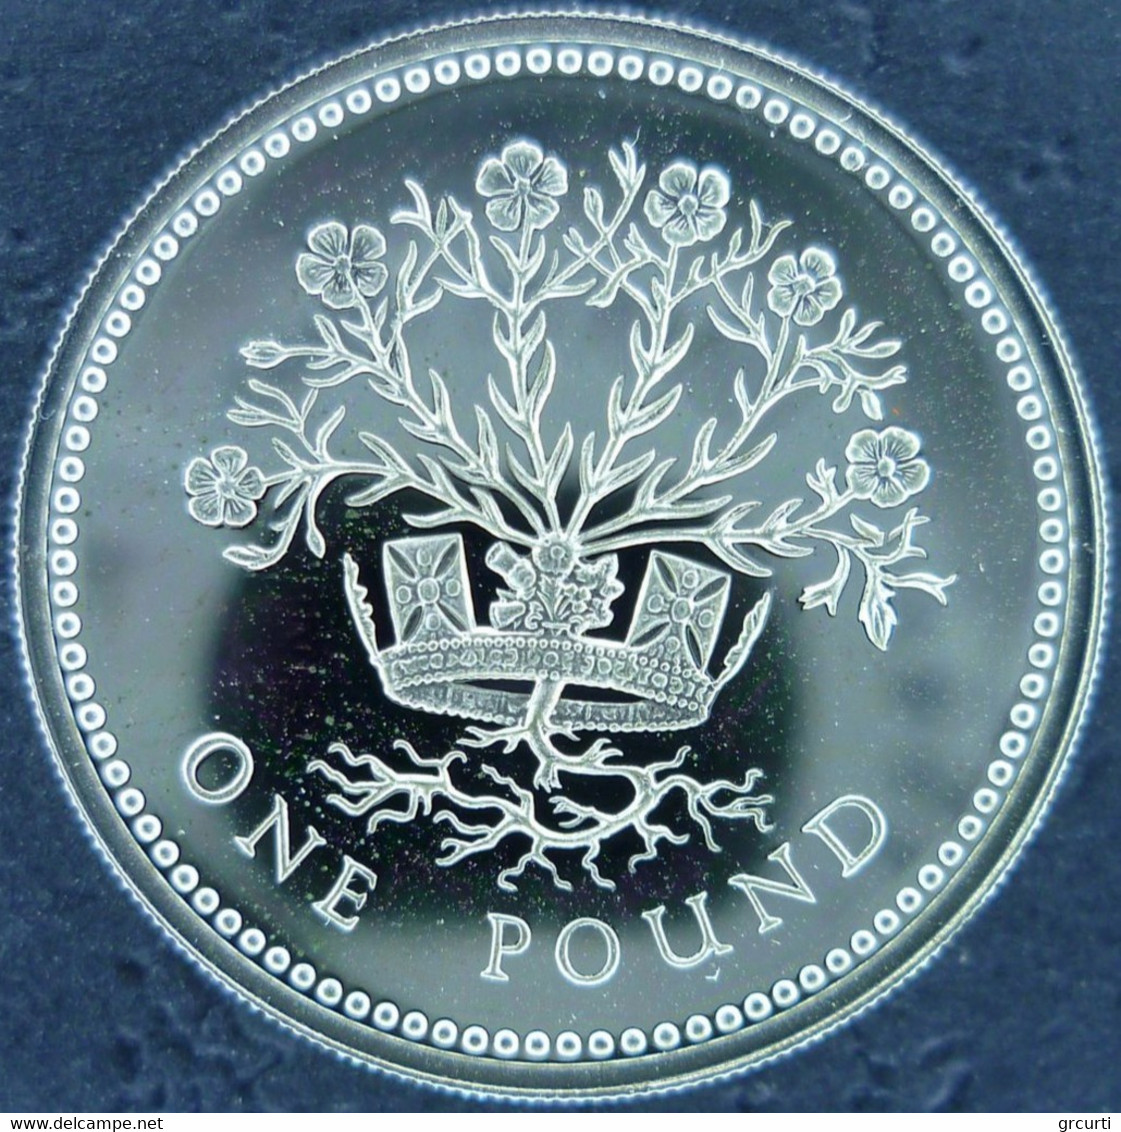 Gran Bretagna - Pound 1991 - Northern Ireland - Blooming Flax - KM# 946a - 1 Pound